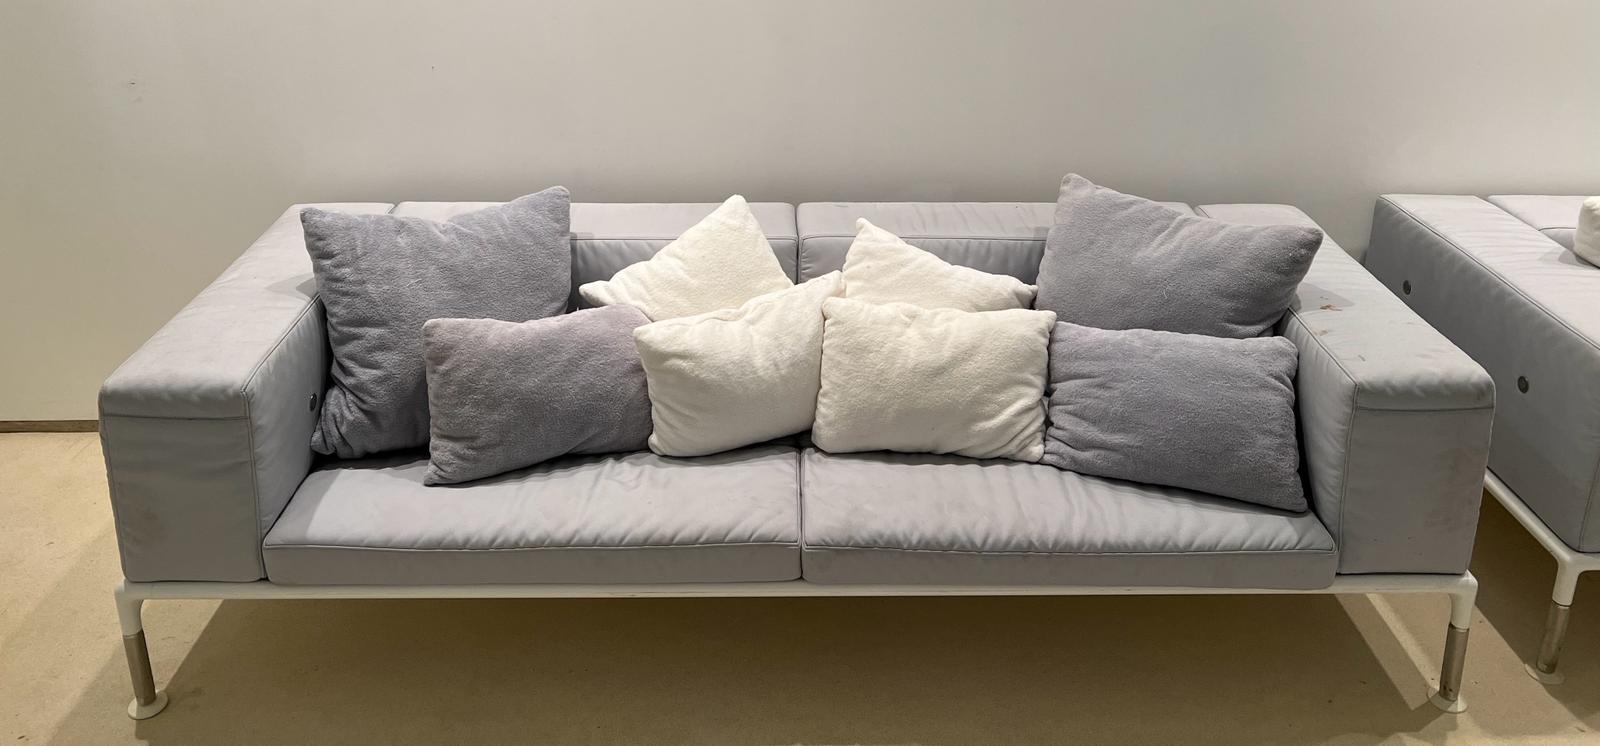 A grey outdoor sofa by B &B Italia outdoor spring time (H73cm W260cm D97cm)